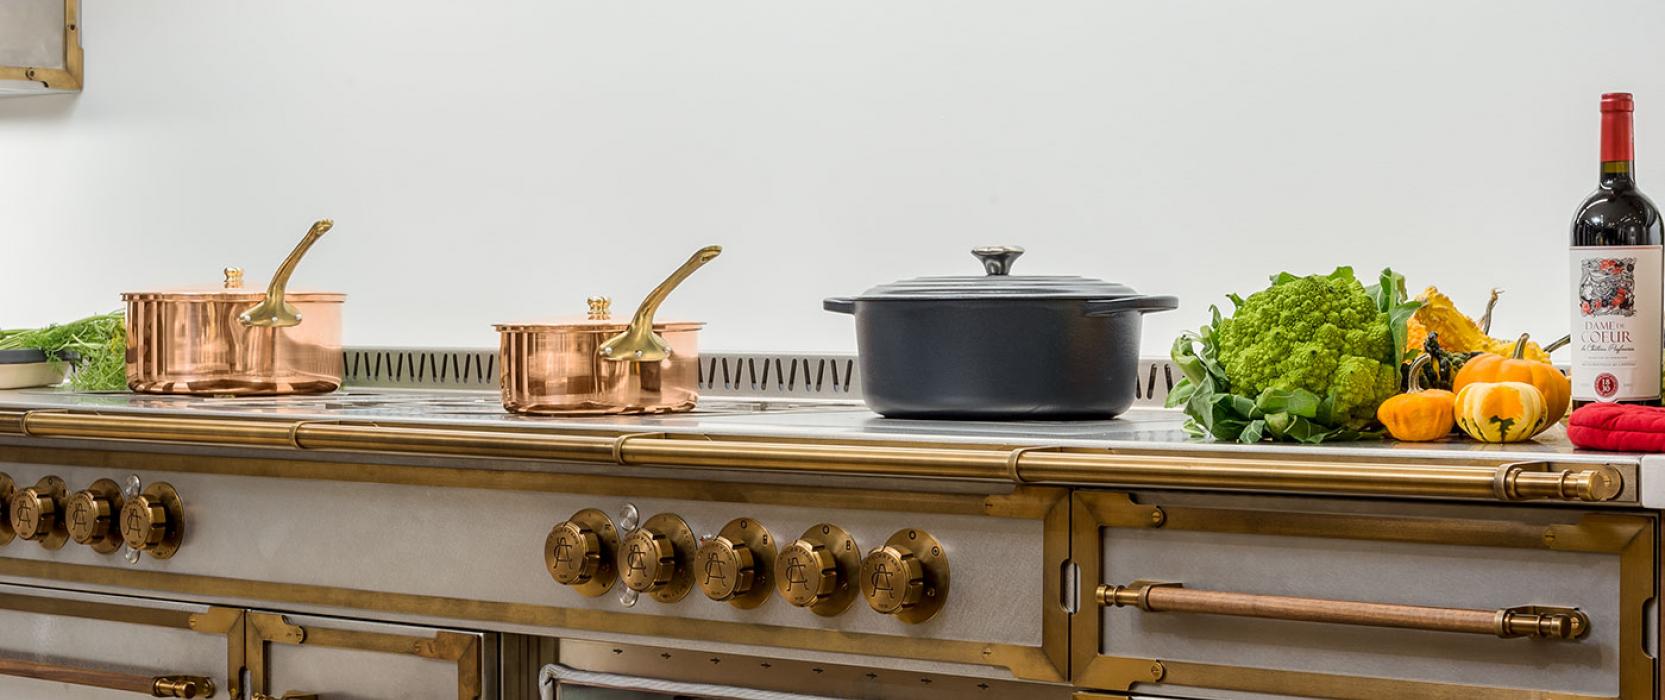 Luxury Range and Oven by L'Atelier Paris